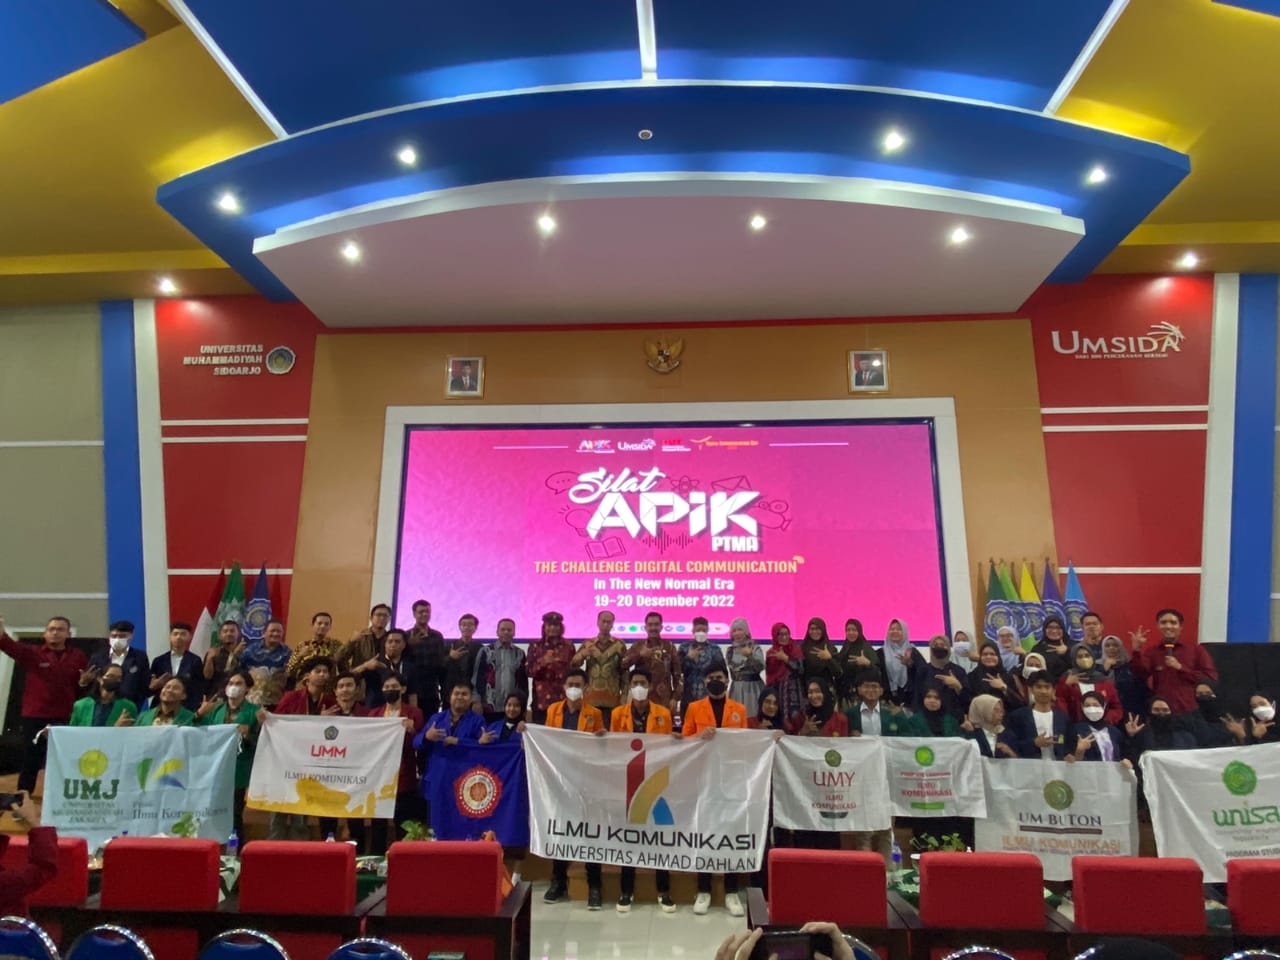 Hadiri Silaturahmi Nasional APIK PTMA 2022 di Sidoarjo, Ini Harapan Kaprodi UMRI